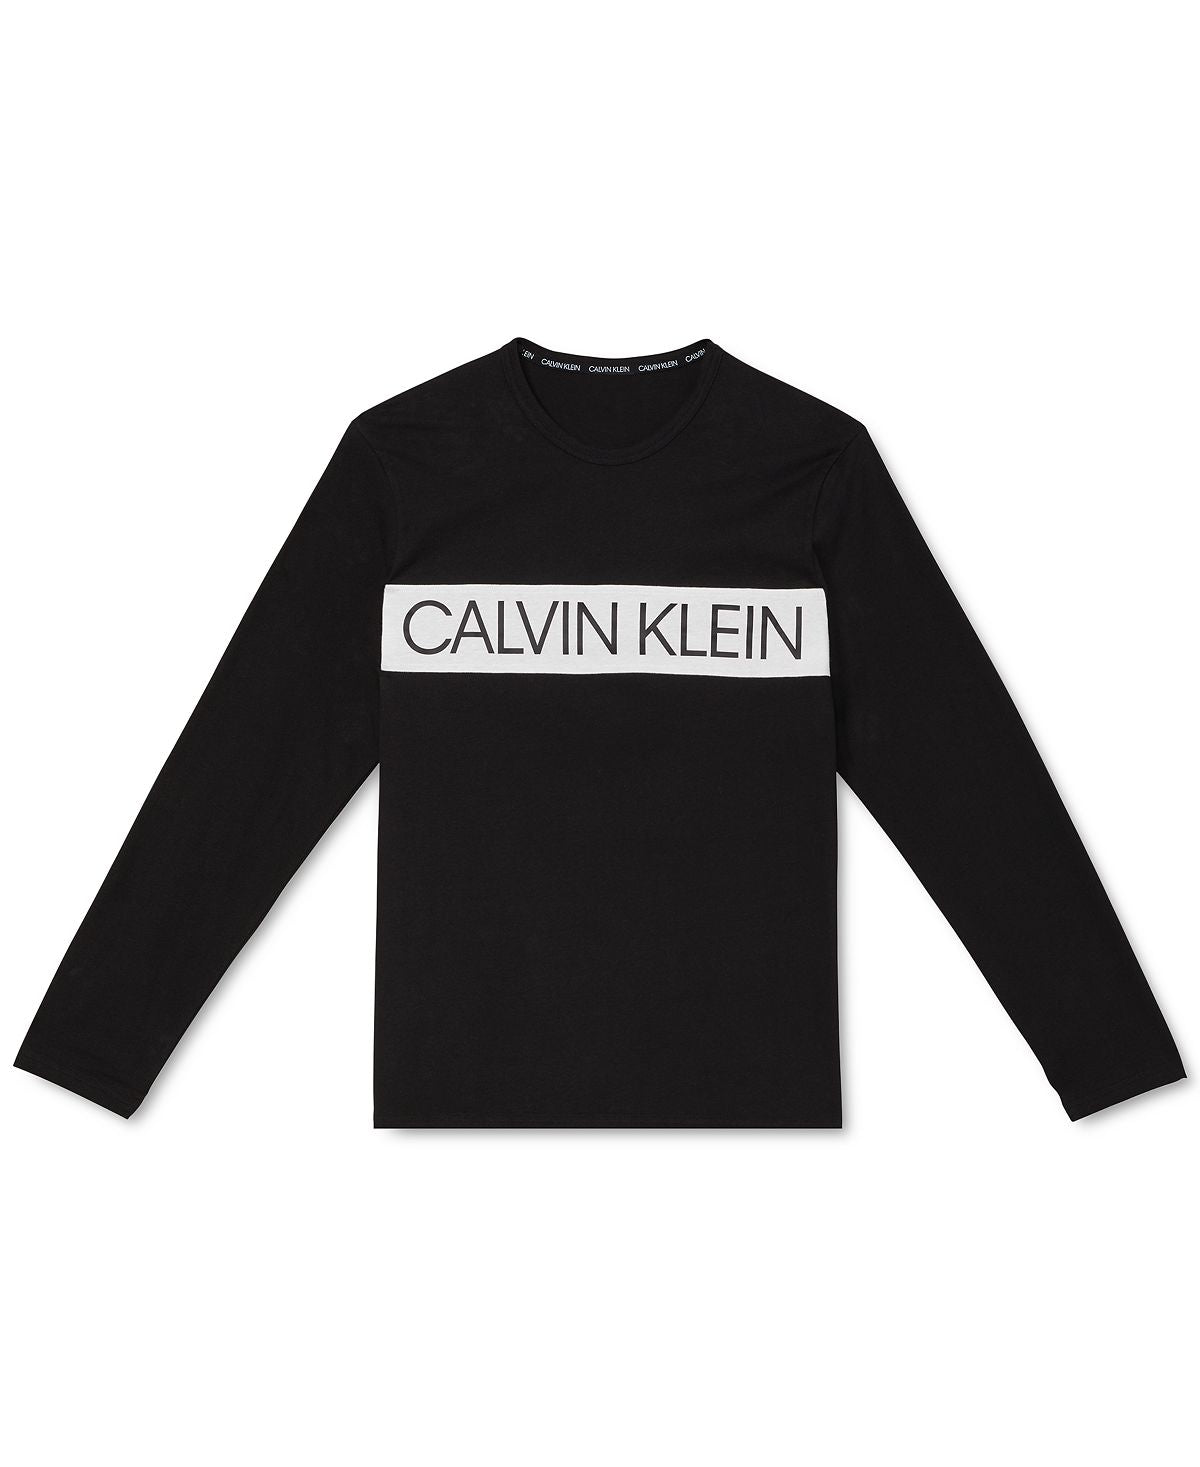 Calvin Klein Logo Long-sleeve T-shirt Black W/ White